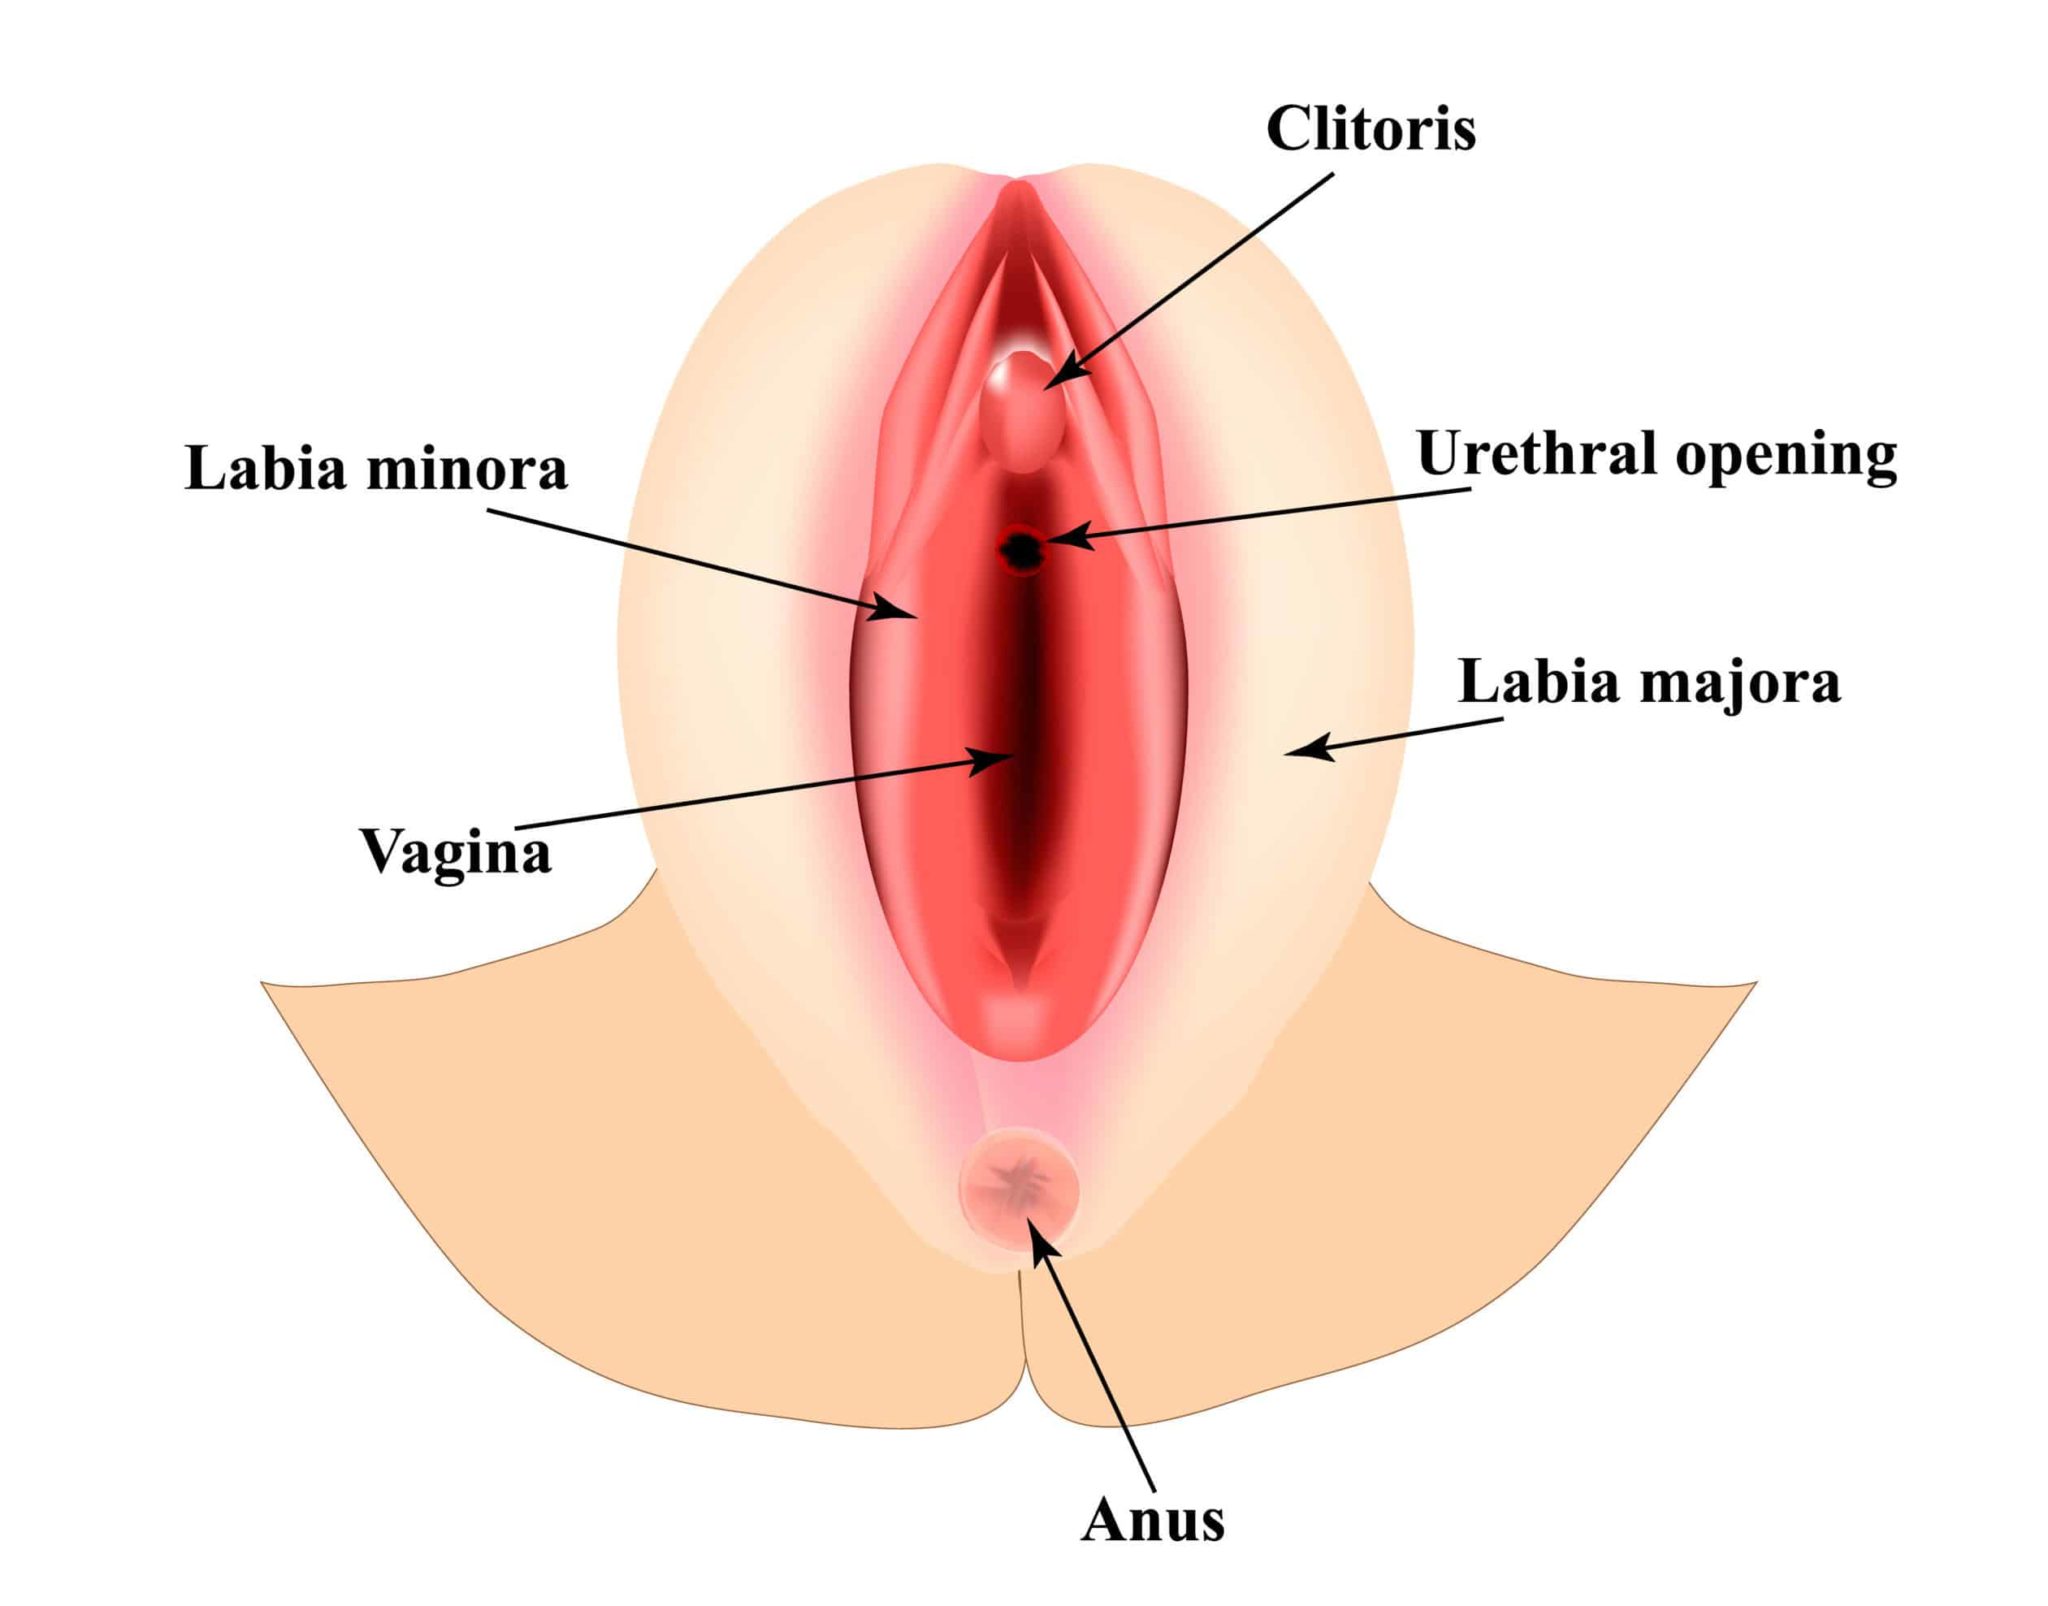 female genitalia anatomy